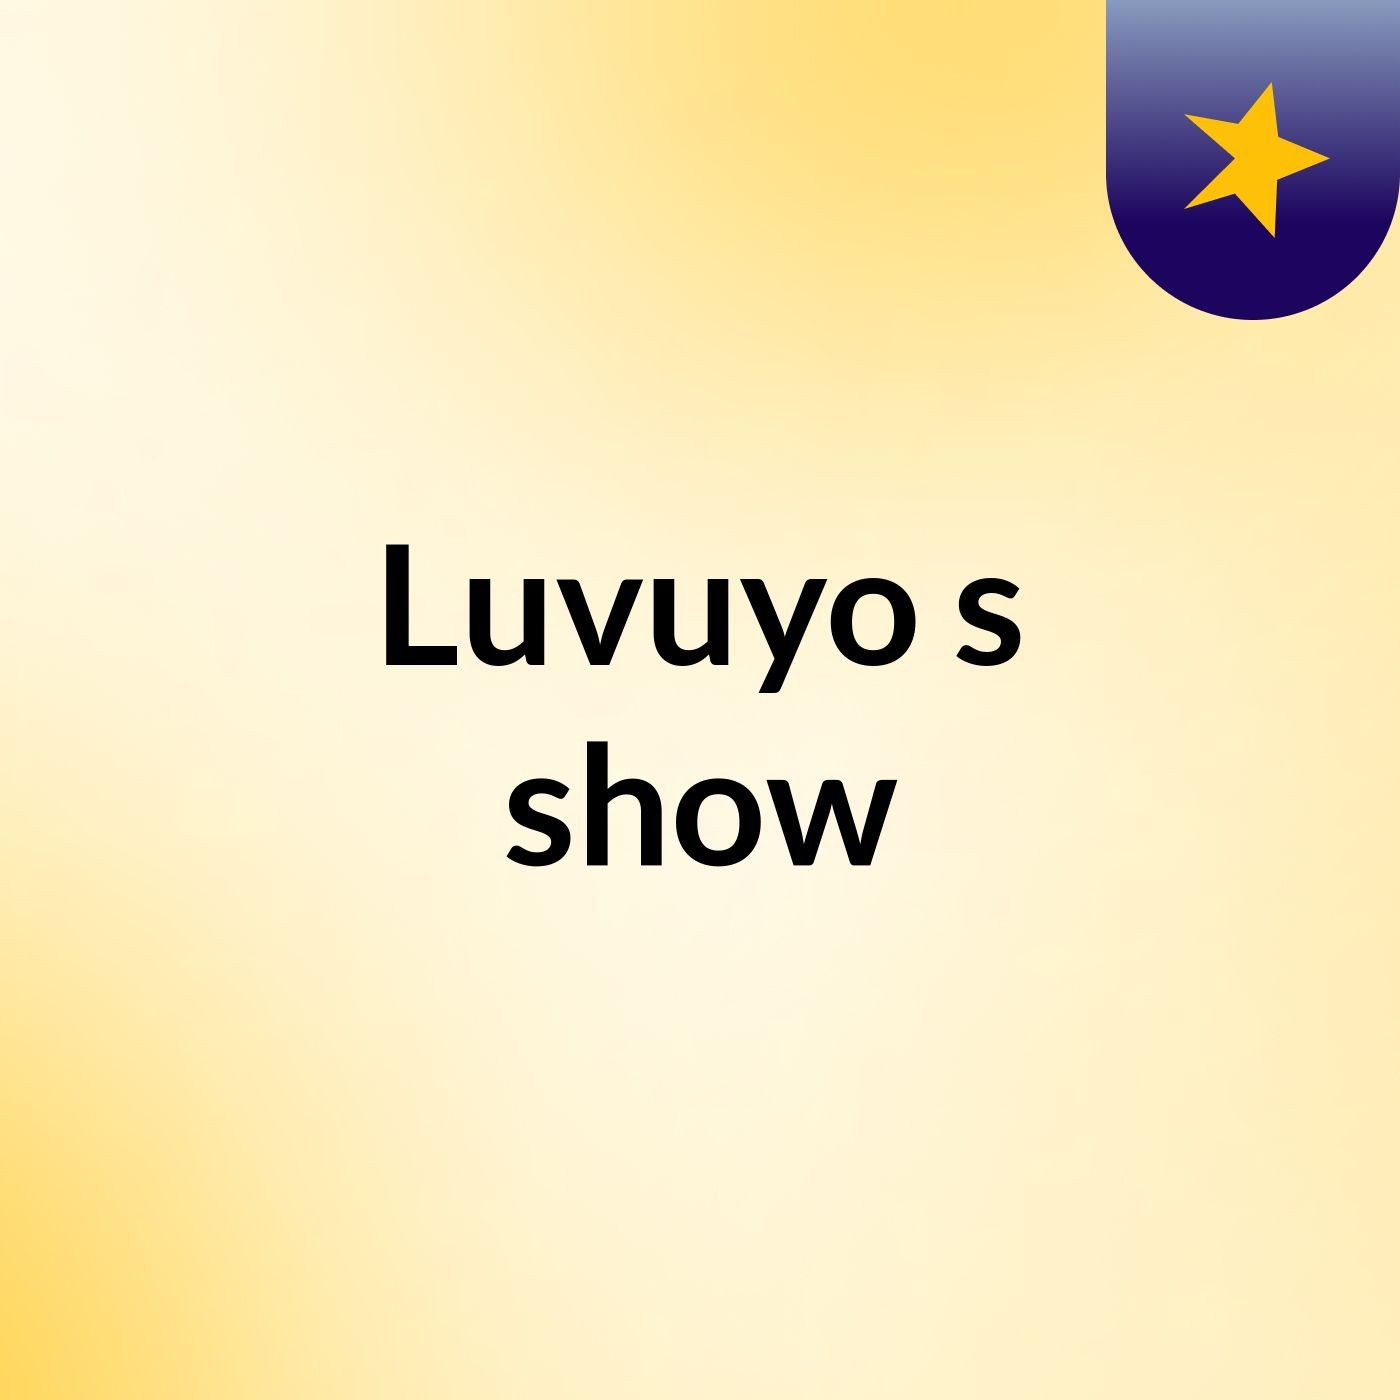 Luvuyo's show